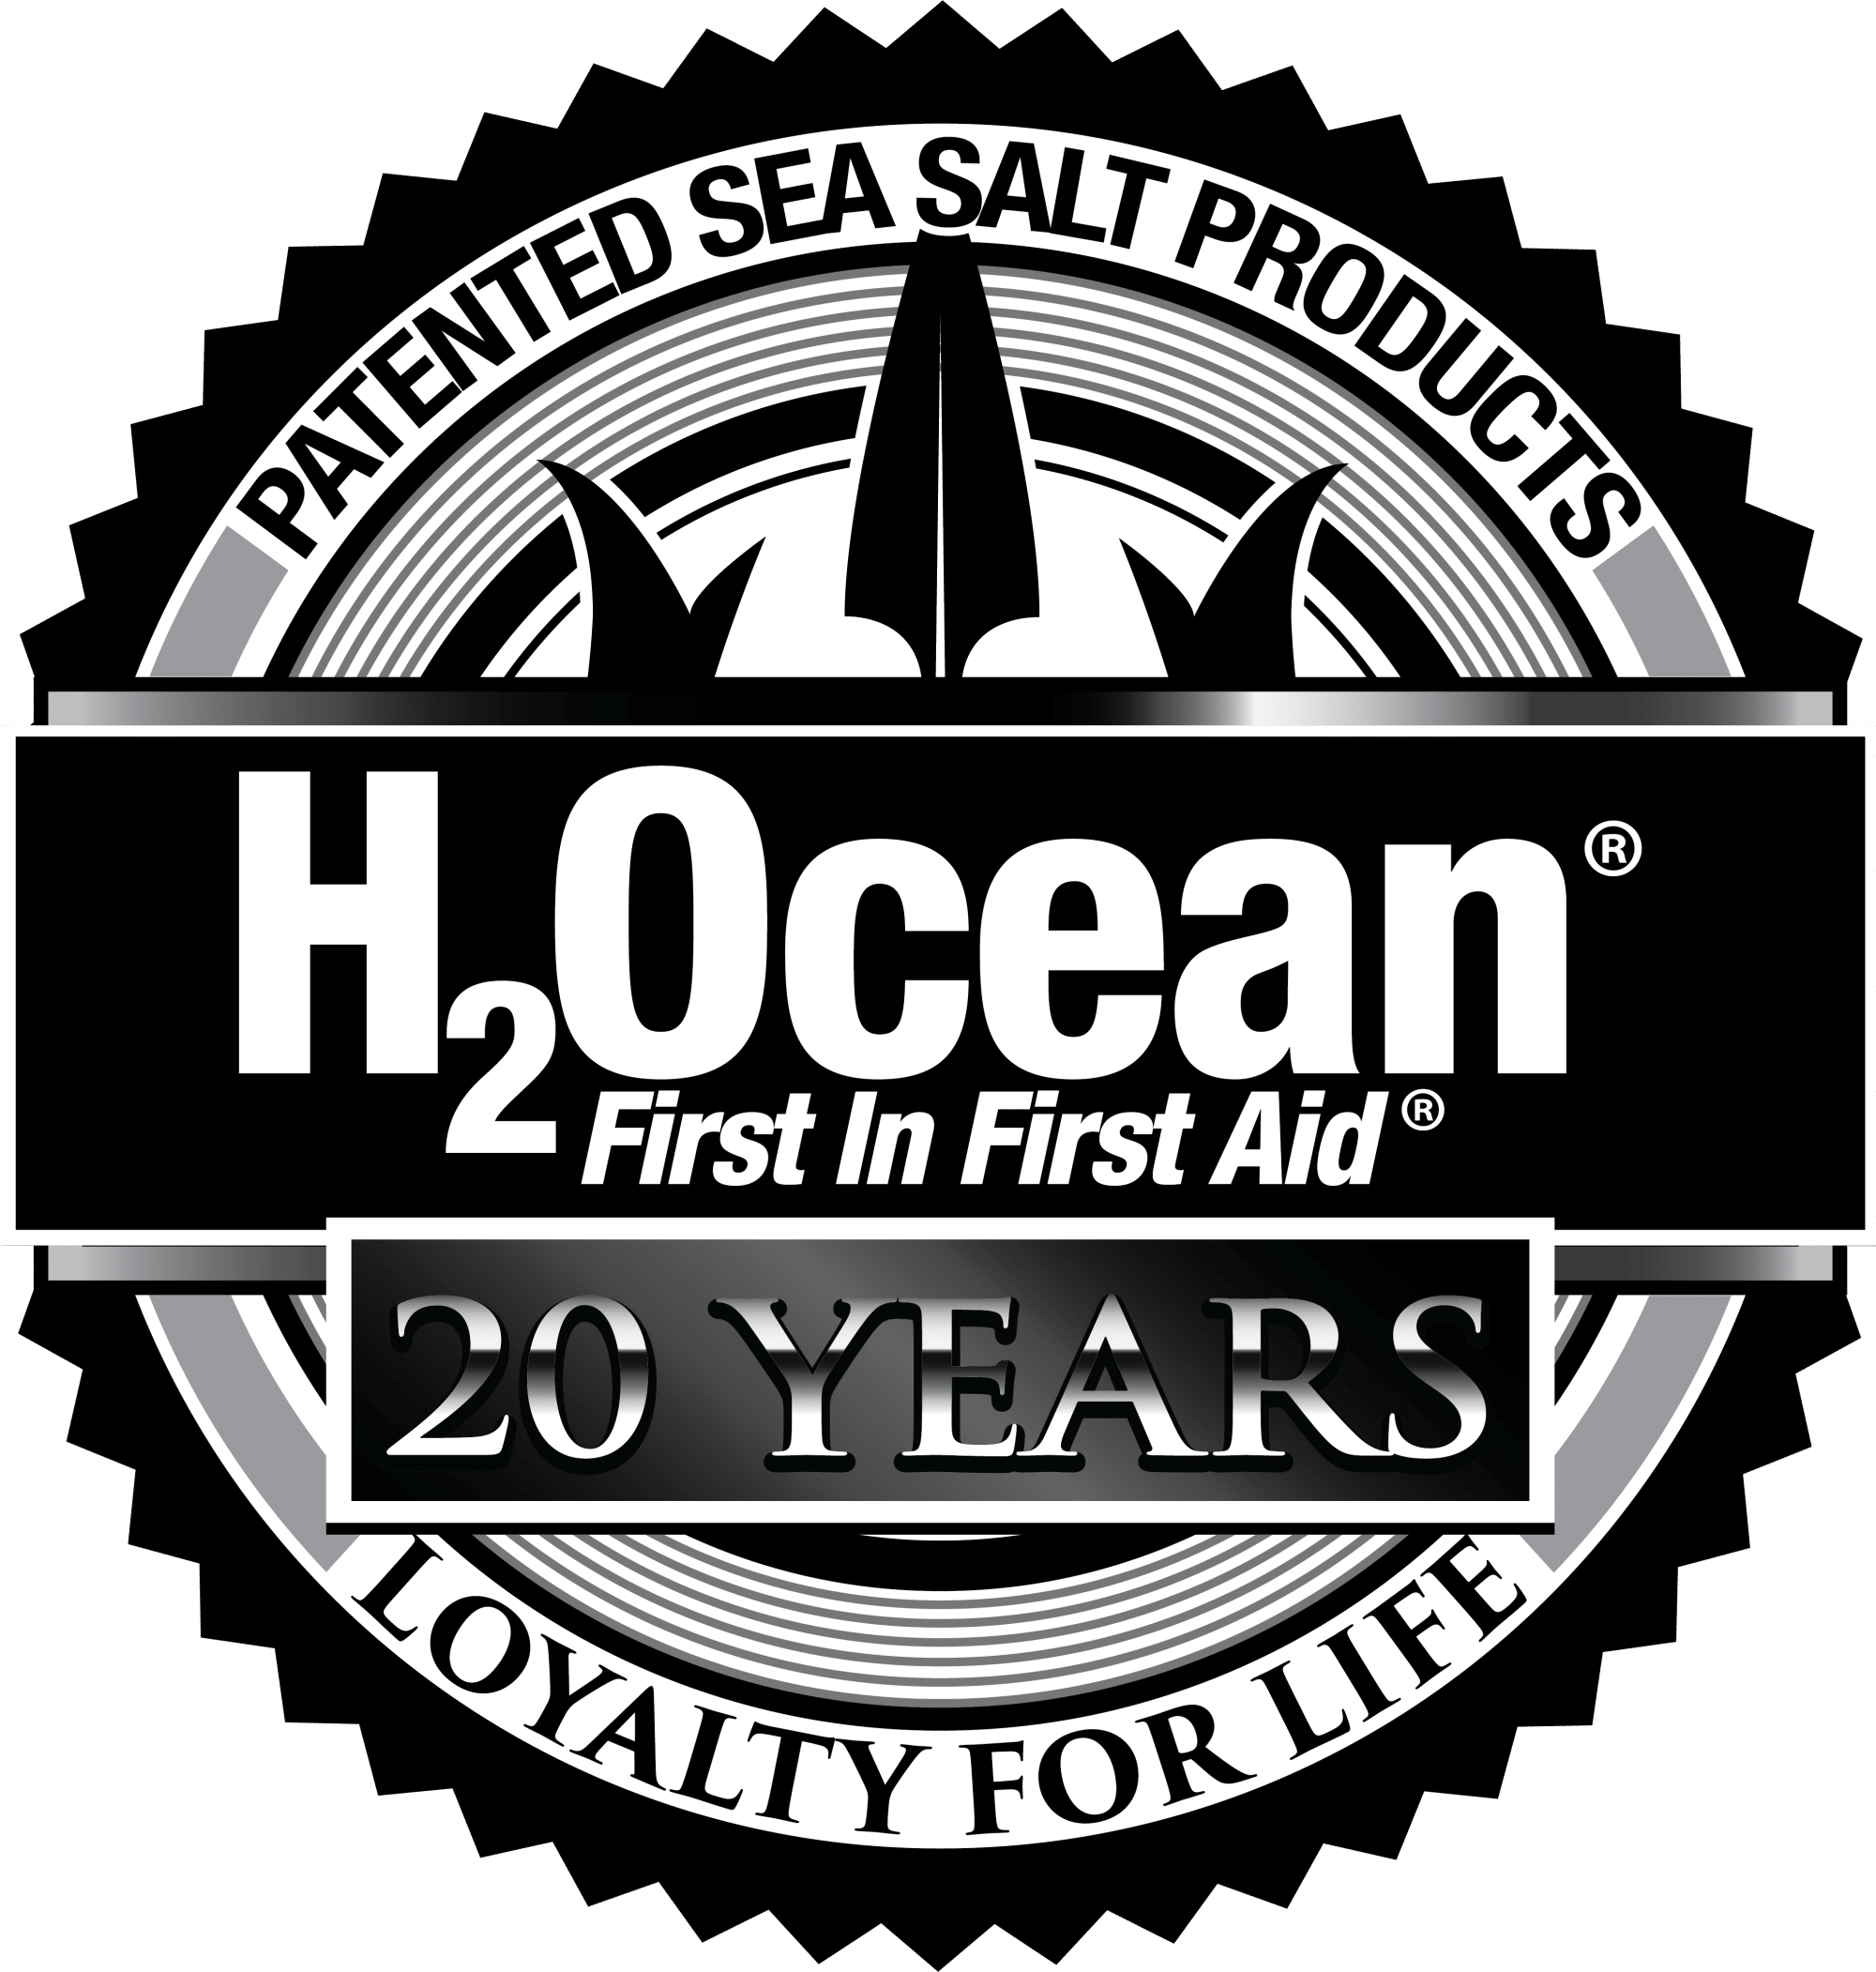 H2Ocean Loyalty for Life!